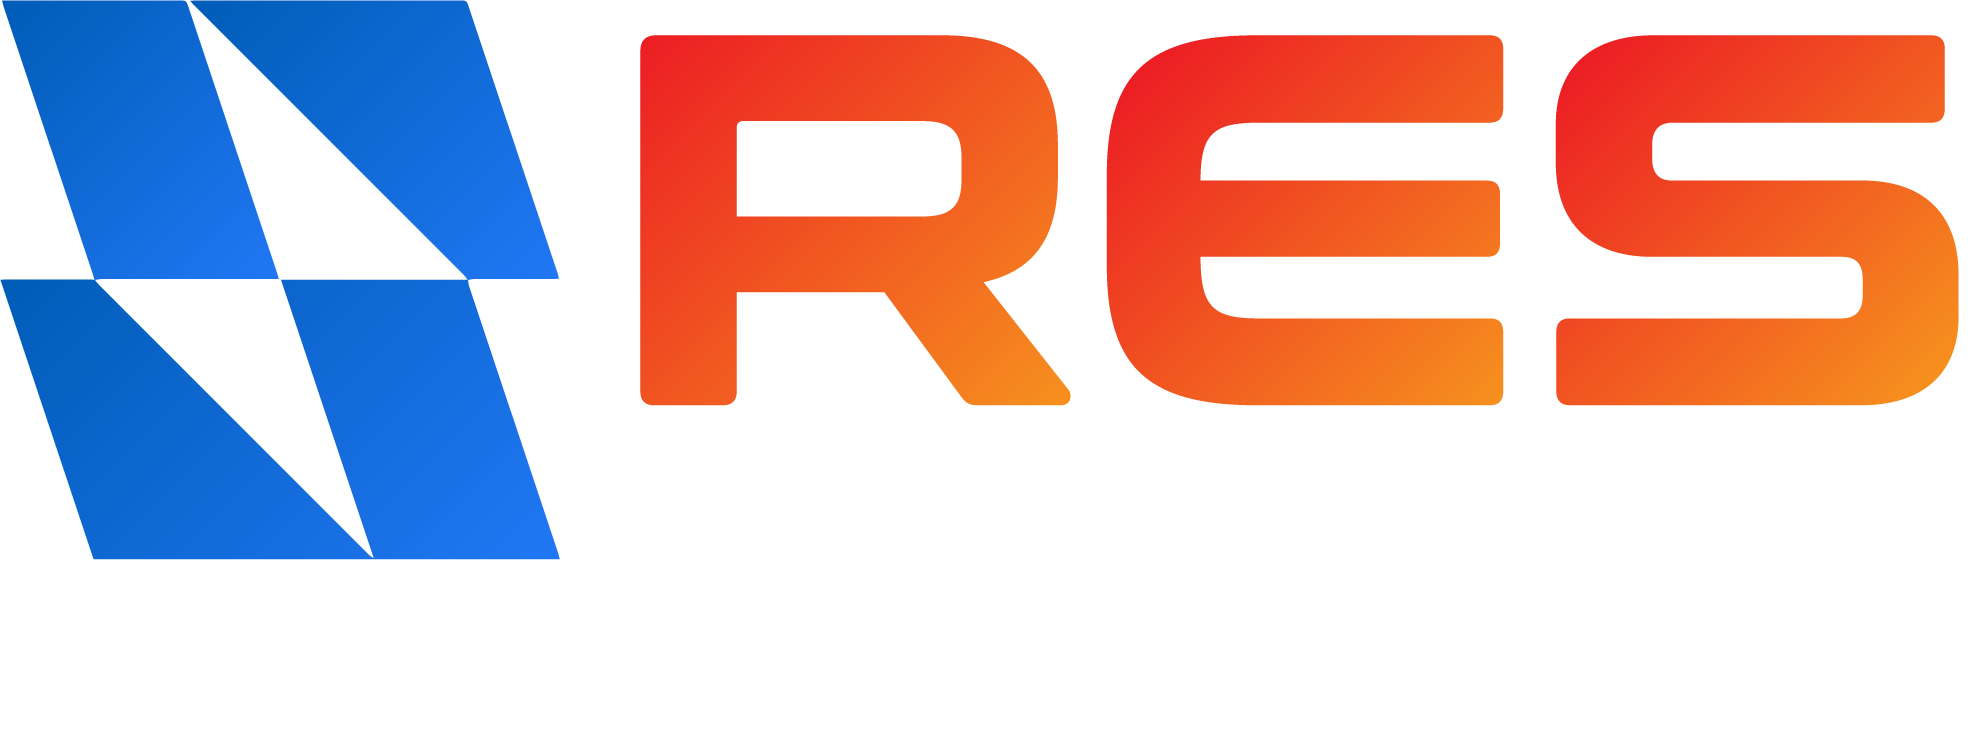 Rajkot e-bikes & solar